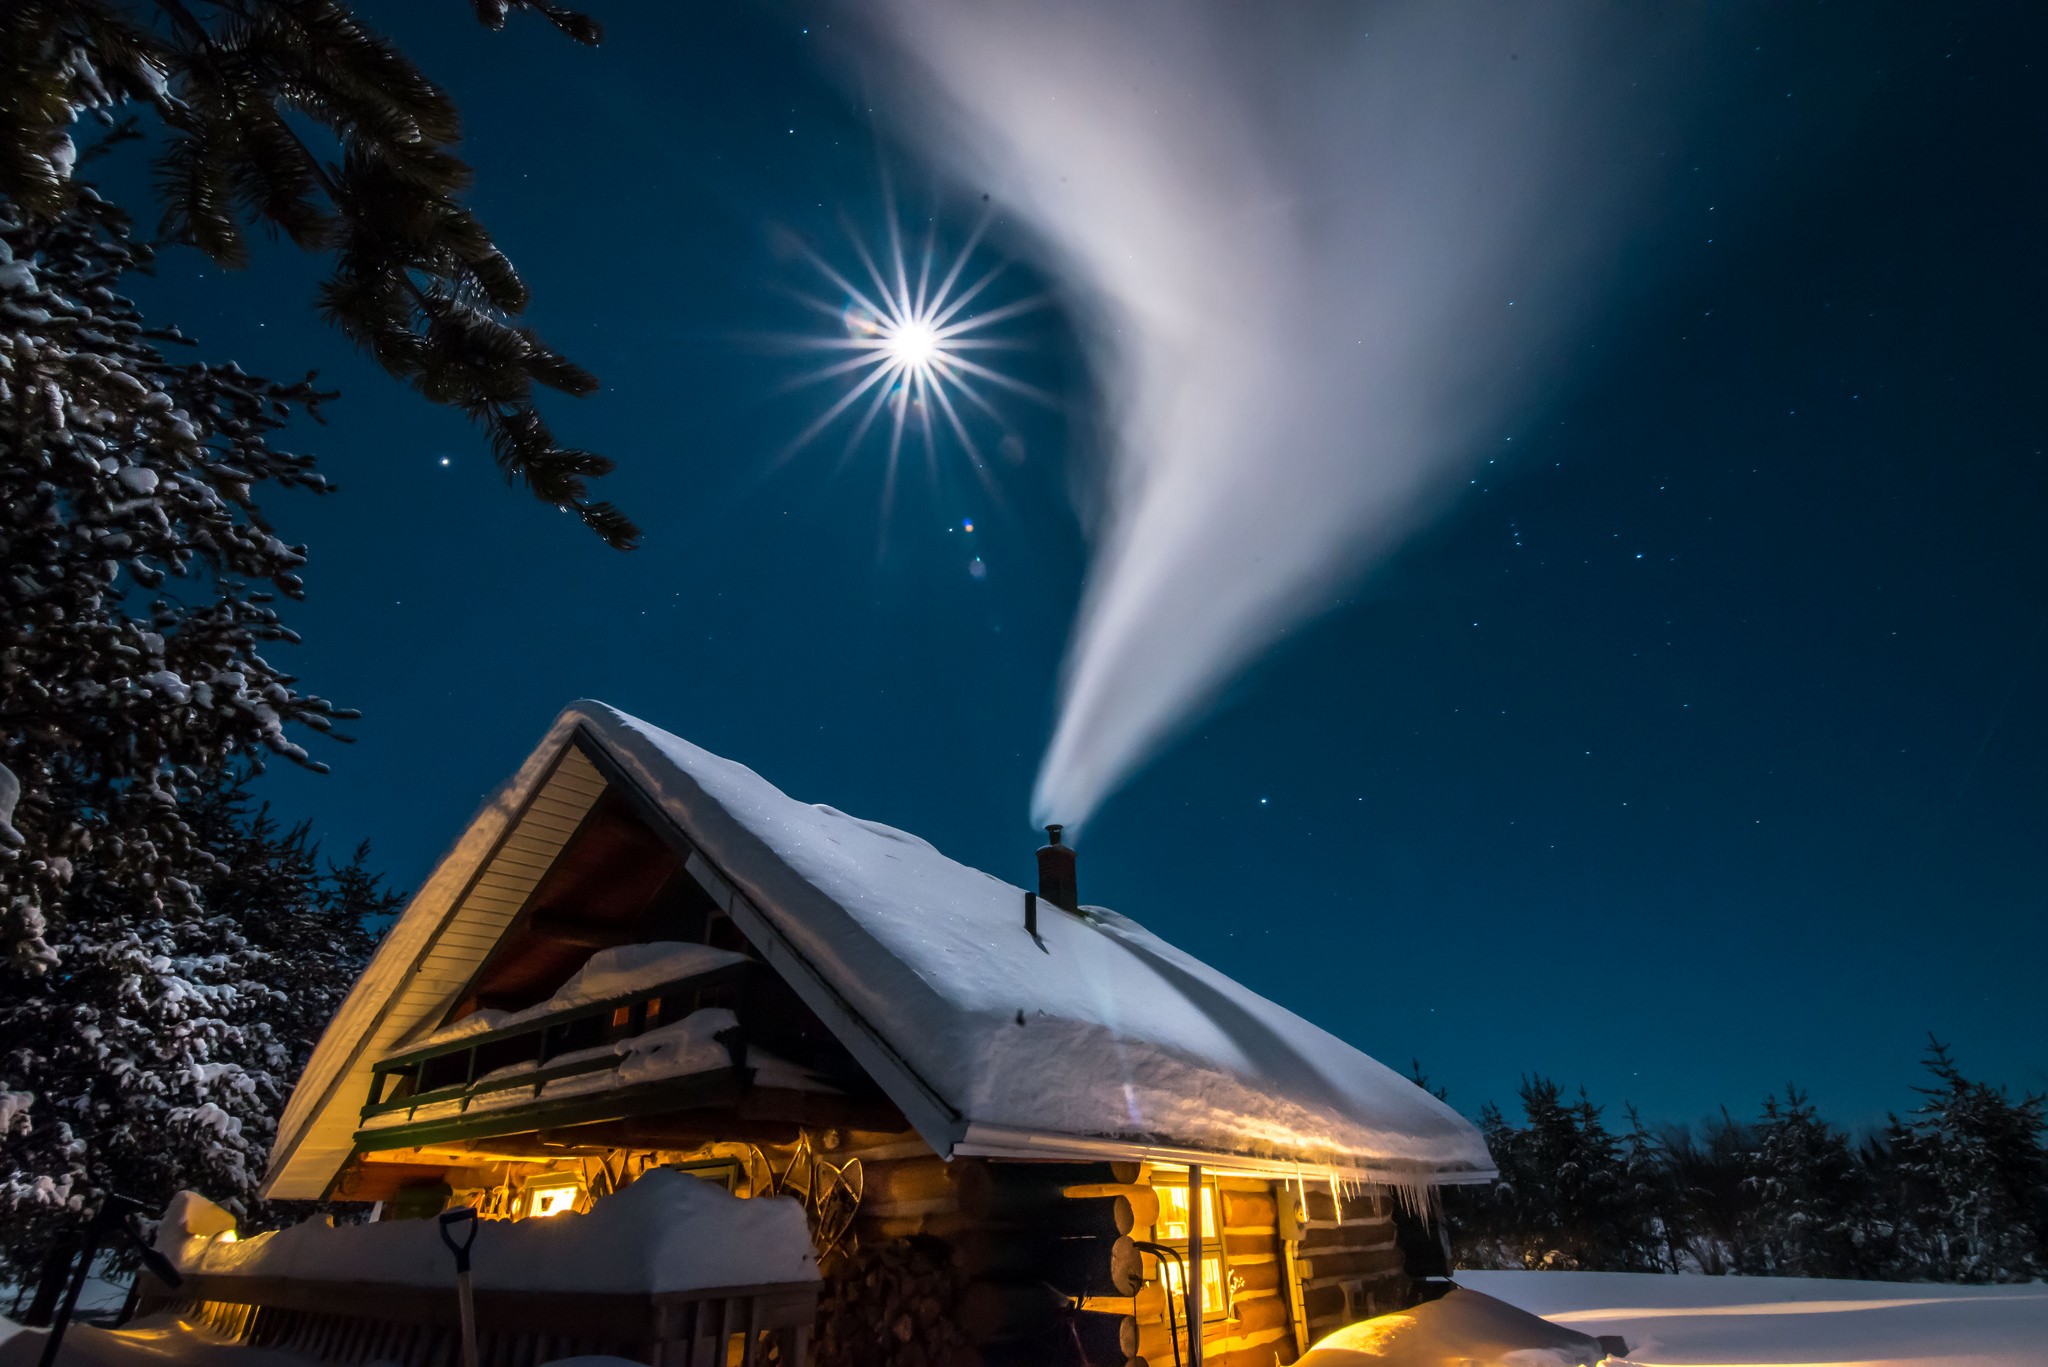 General 2048x1367 night sky winter house snow stars hut